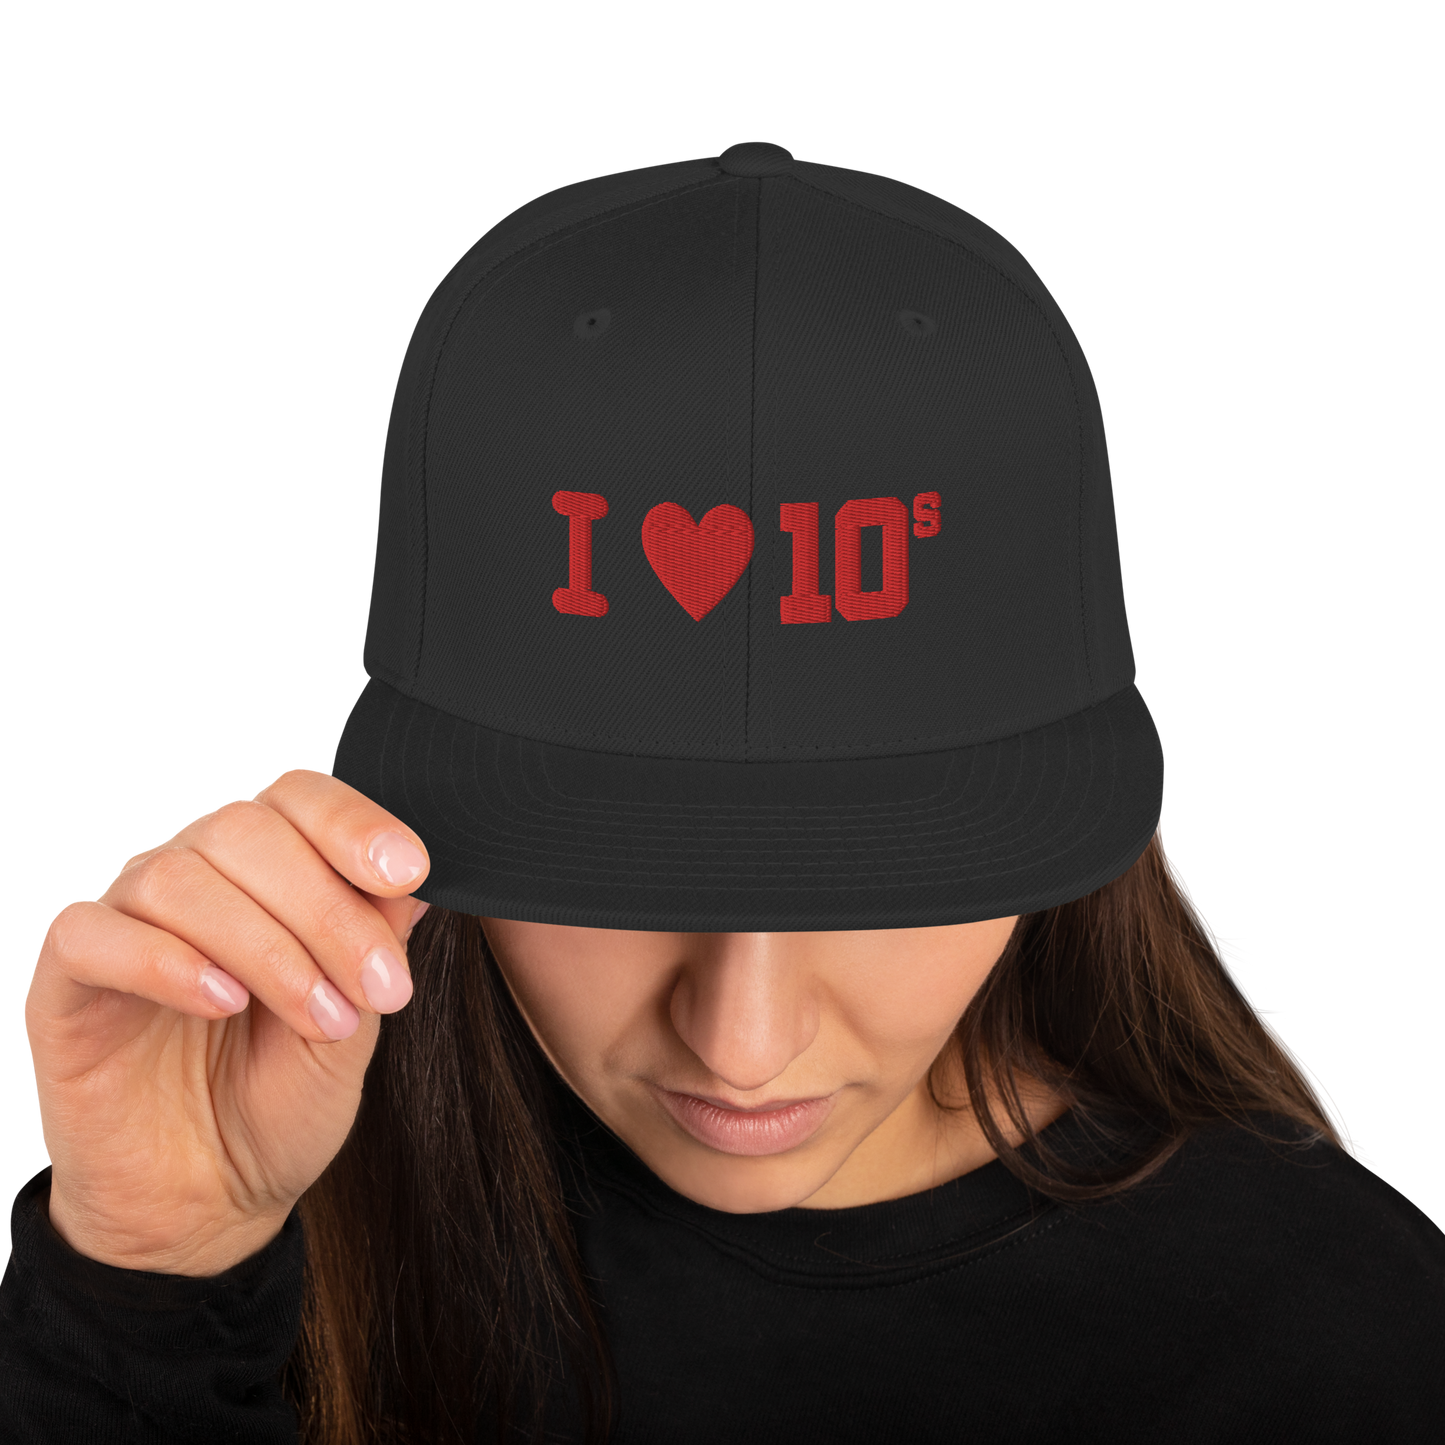 Sqdltd ILUV10s Snapback Hat VRed